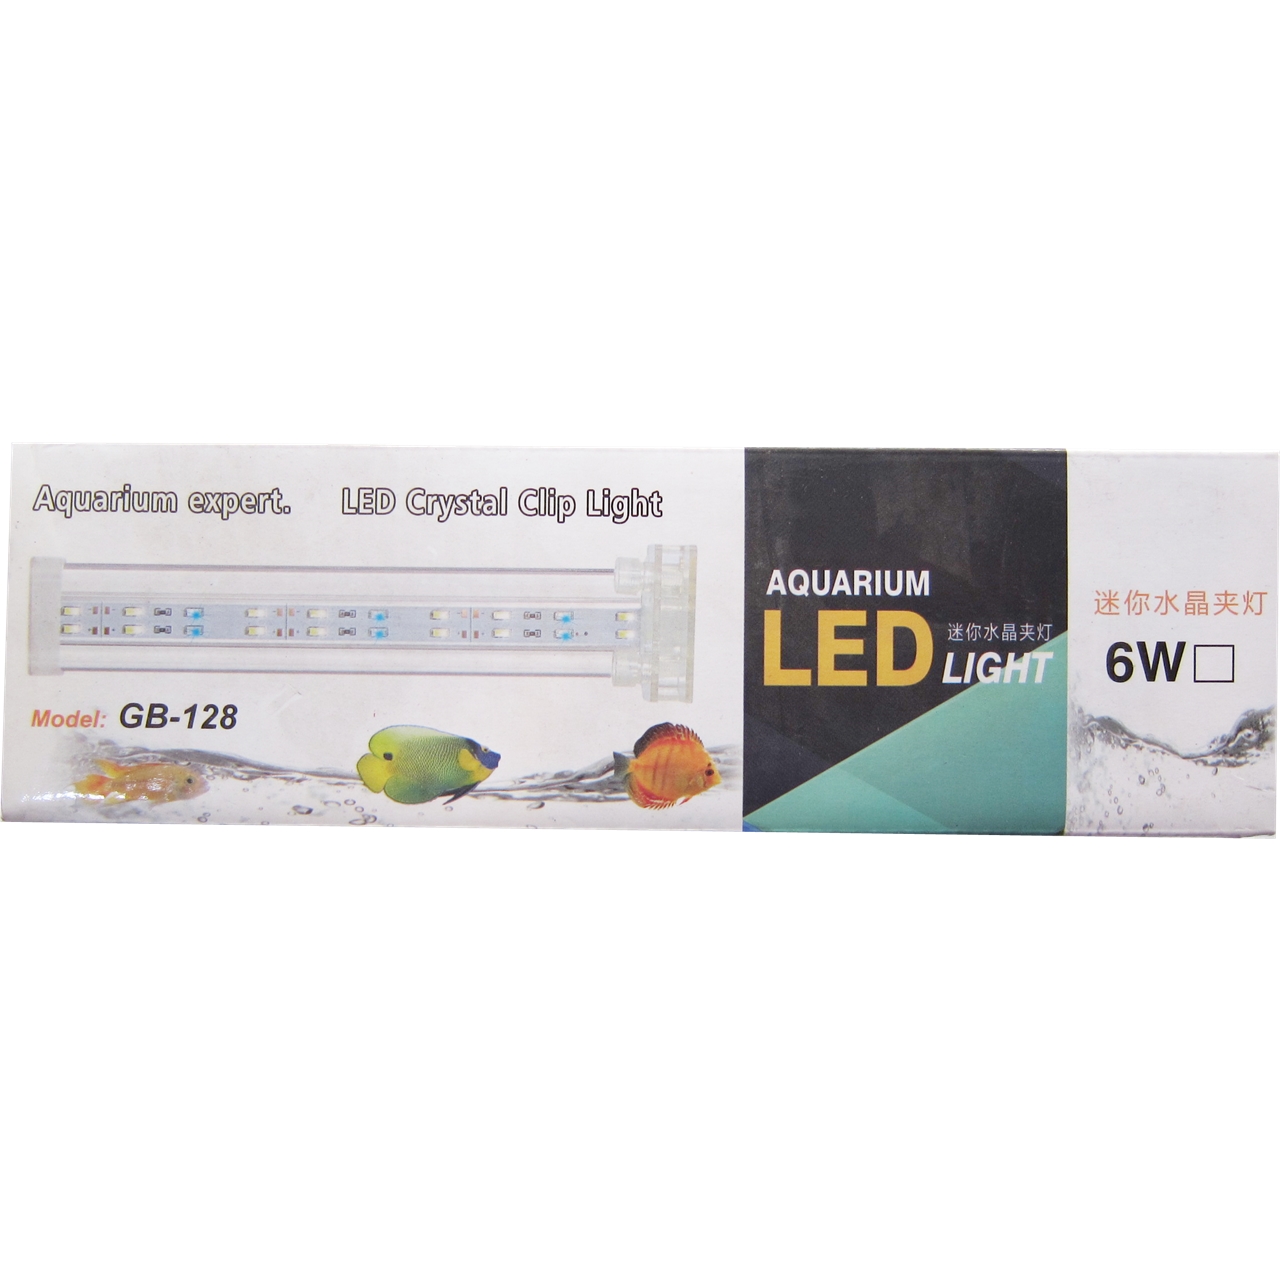 لامپ ال ای دی آکواریوم مدل GB-128 توان 6 وات